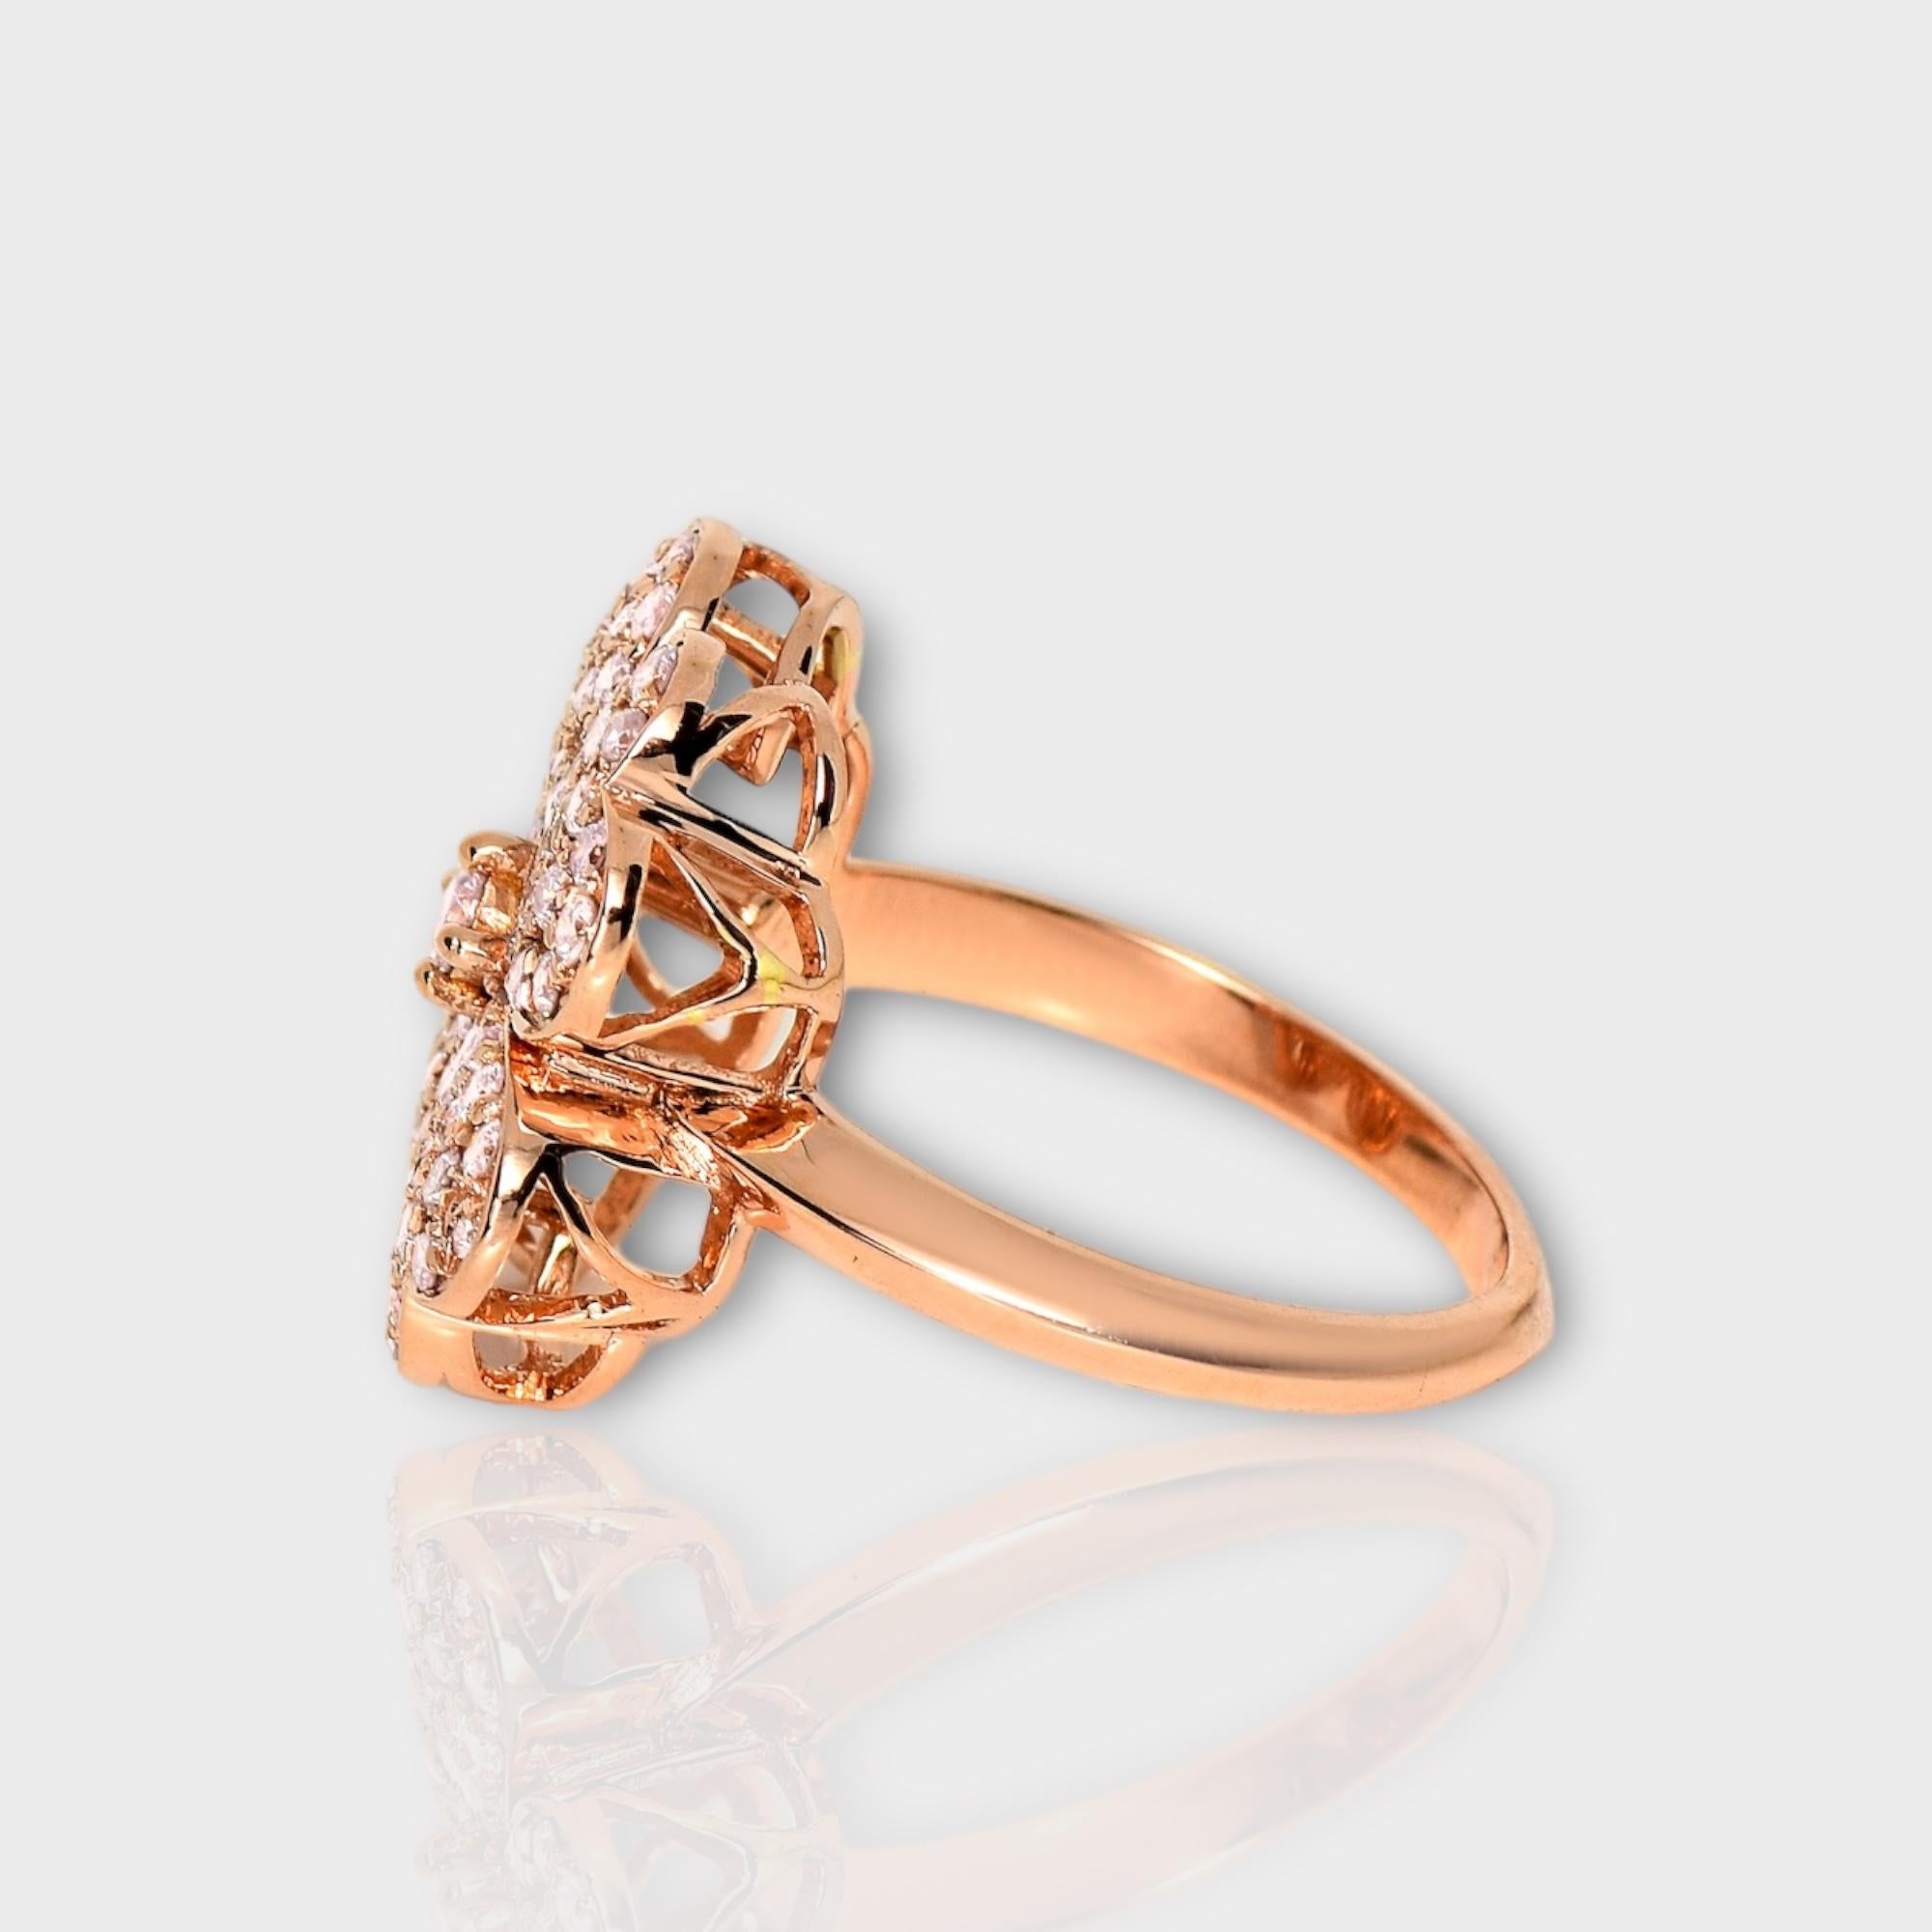 IGI 14K 0.98 ct Natural Pink Diamonds Lucky Clover Antique Design Ring For Sale 1